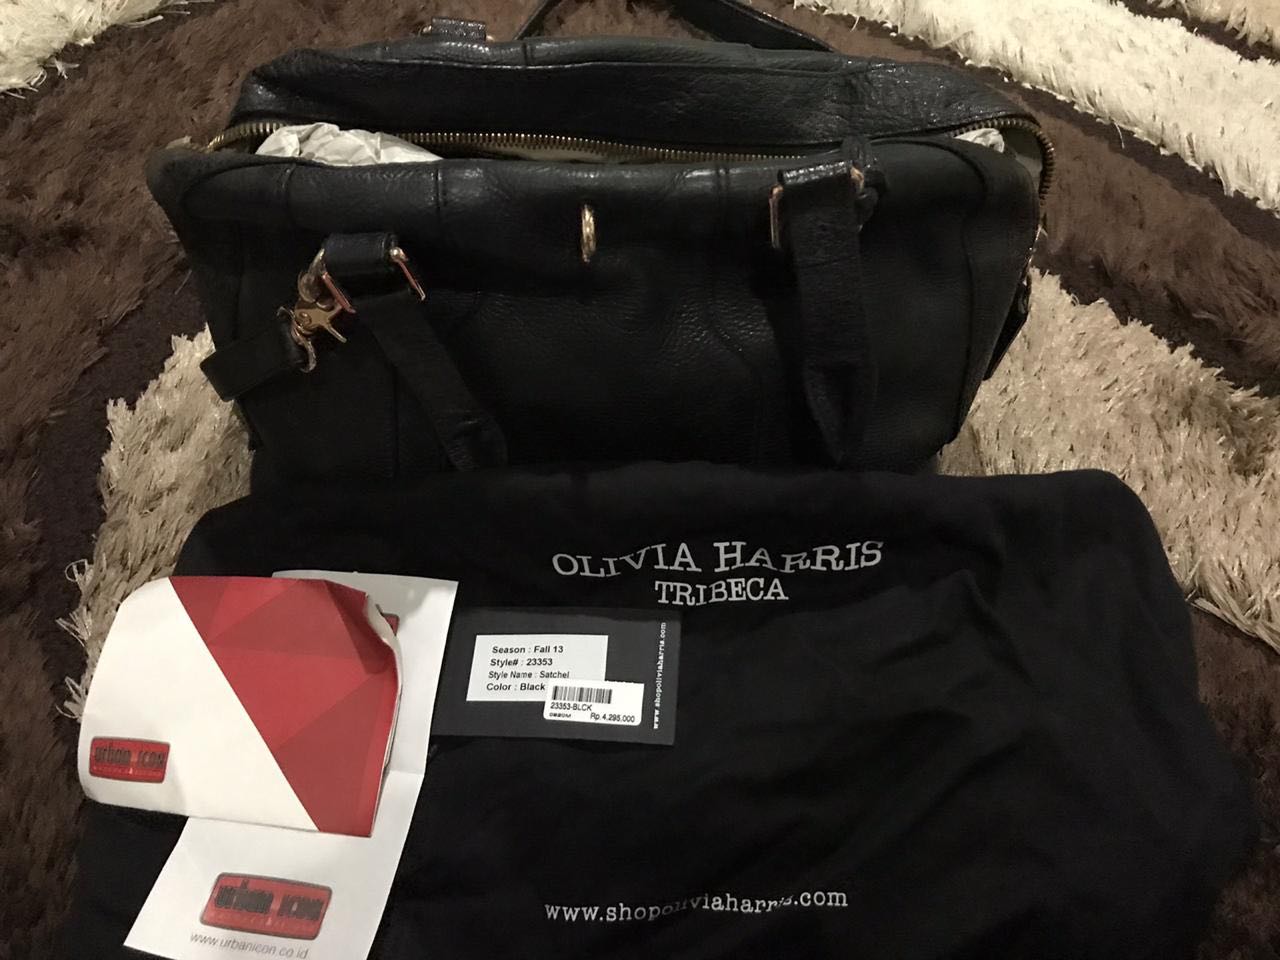 Olivia Harris Front Pocket Tote Bags | Mercari